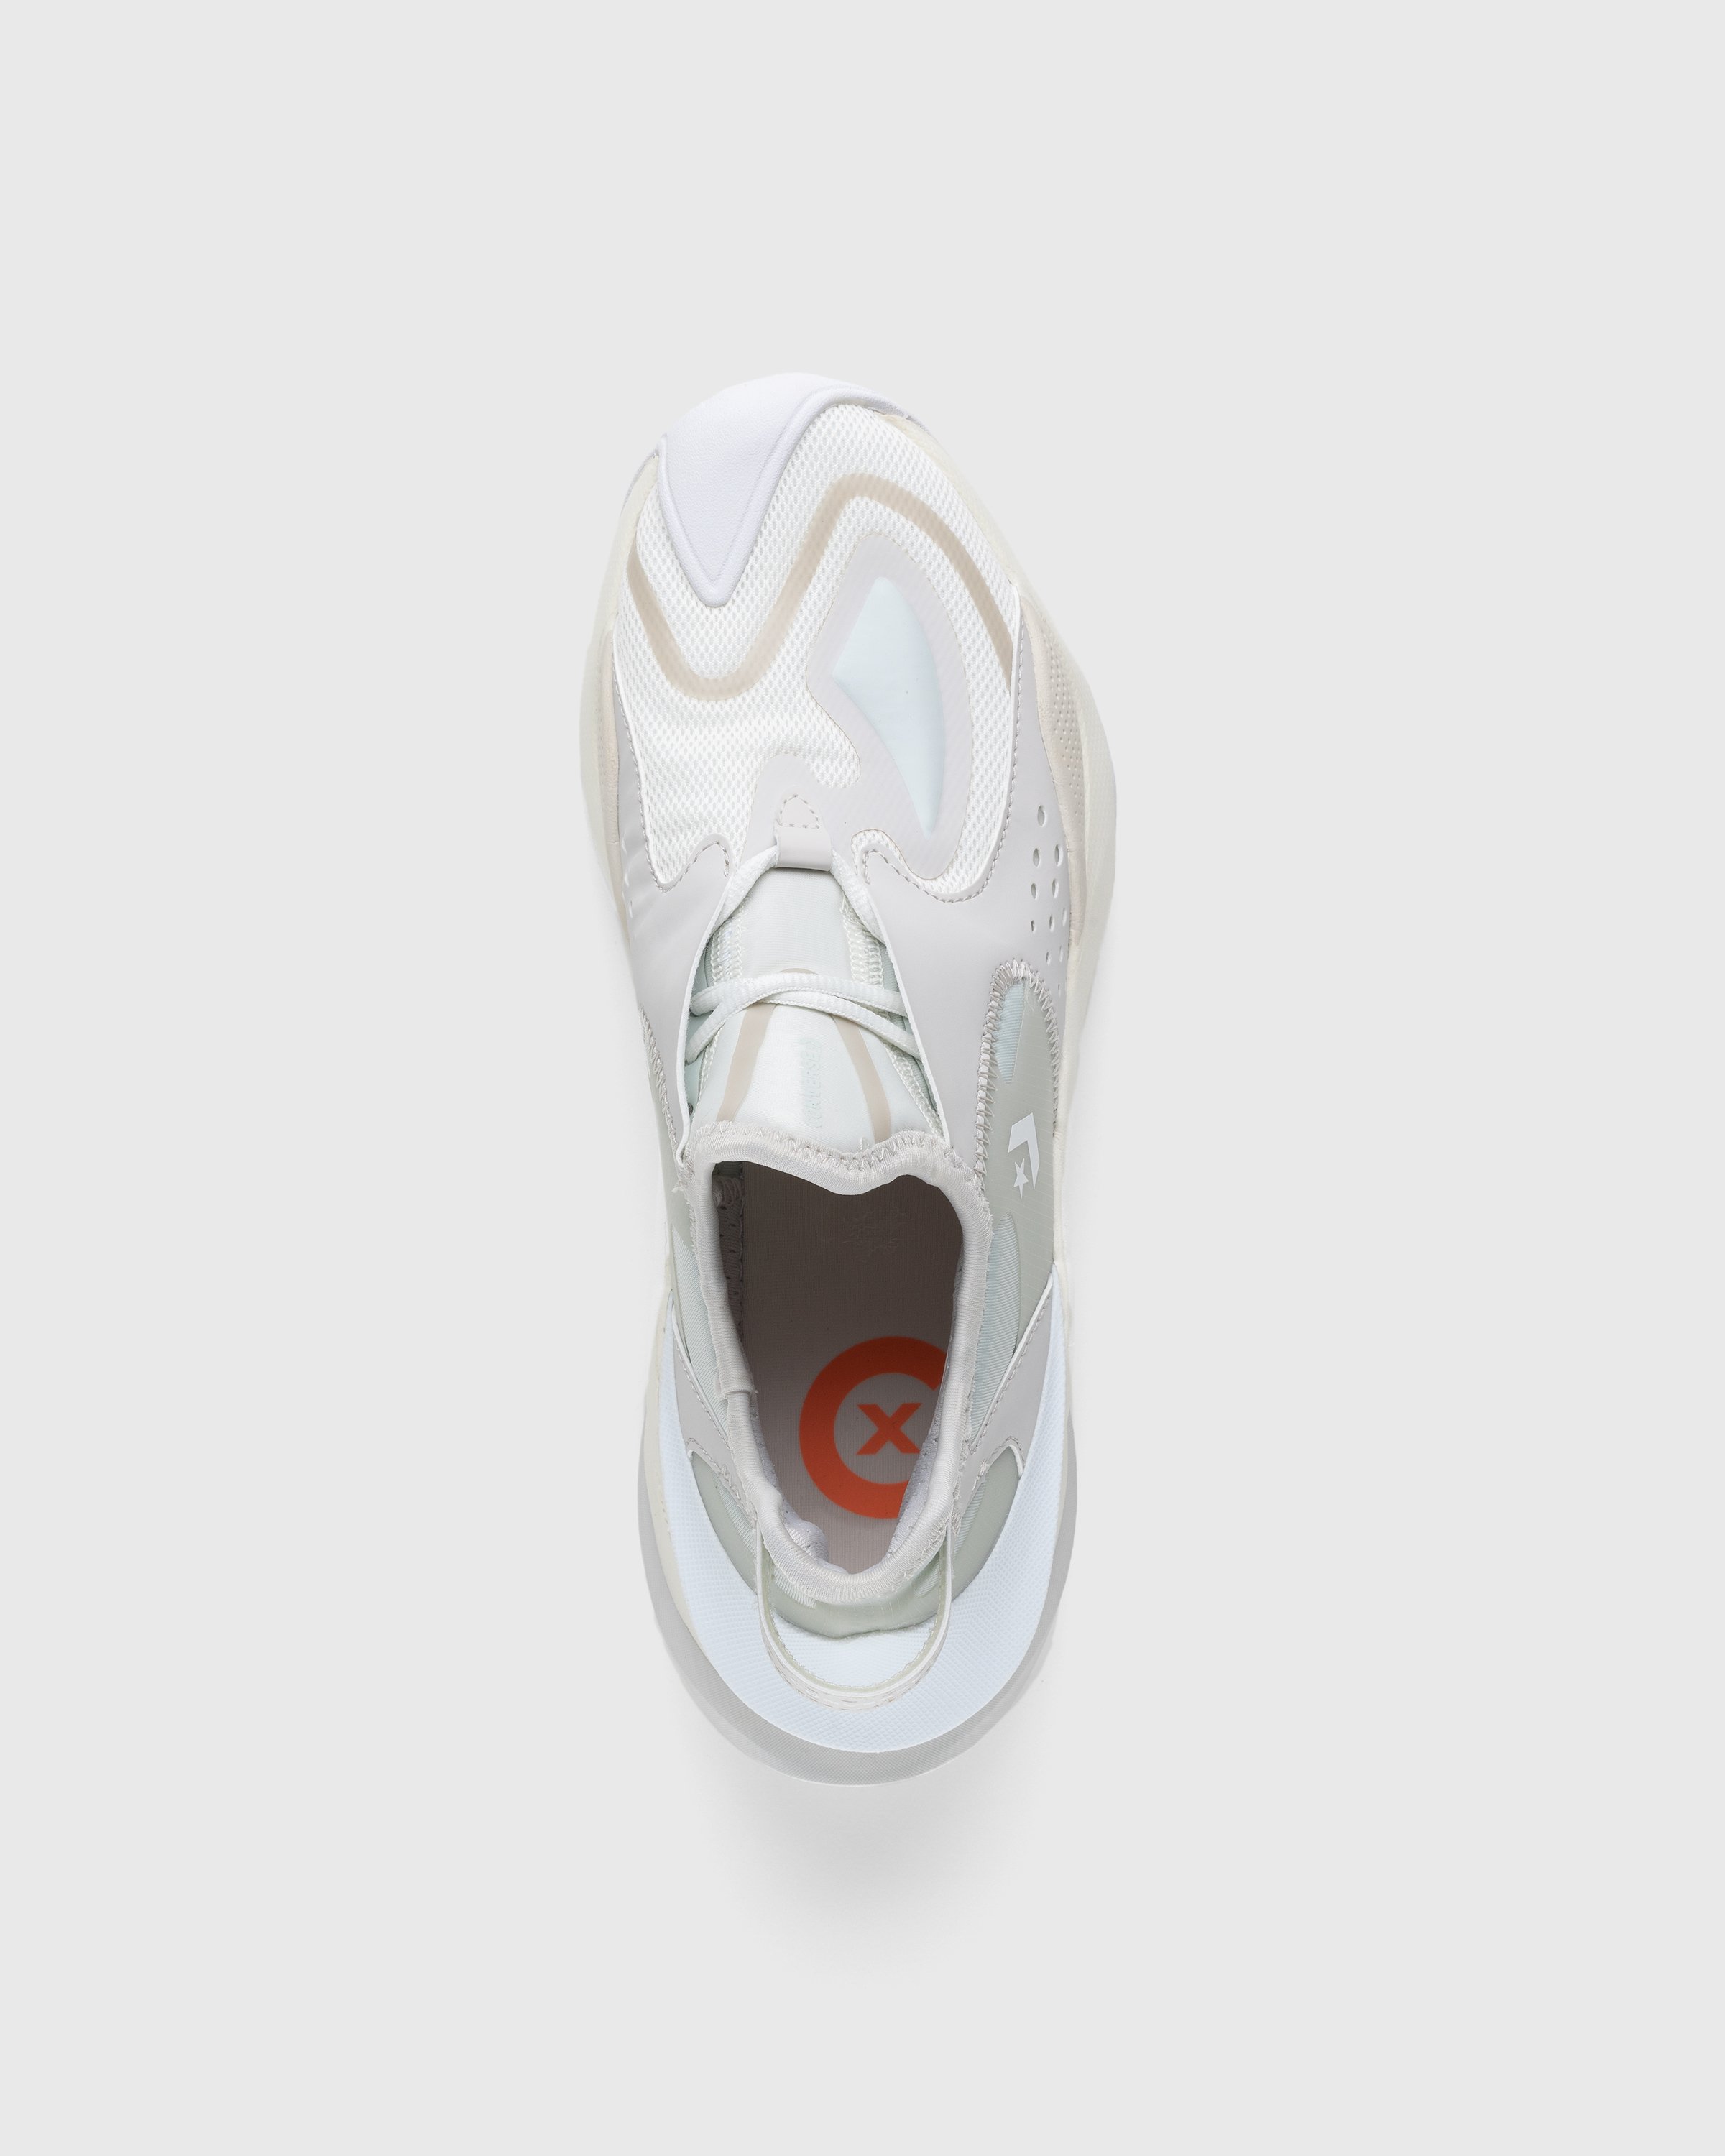 Converse - Aeon Active Cx Ox Egret/Pale Putty - Footwear - White - Image 5